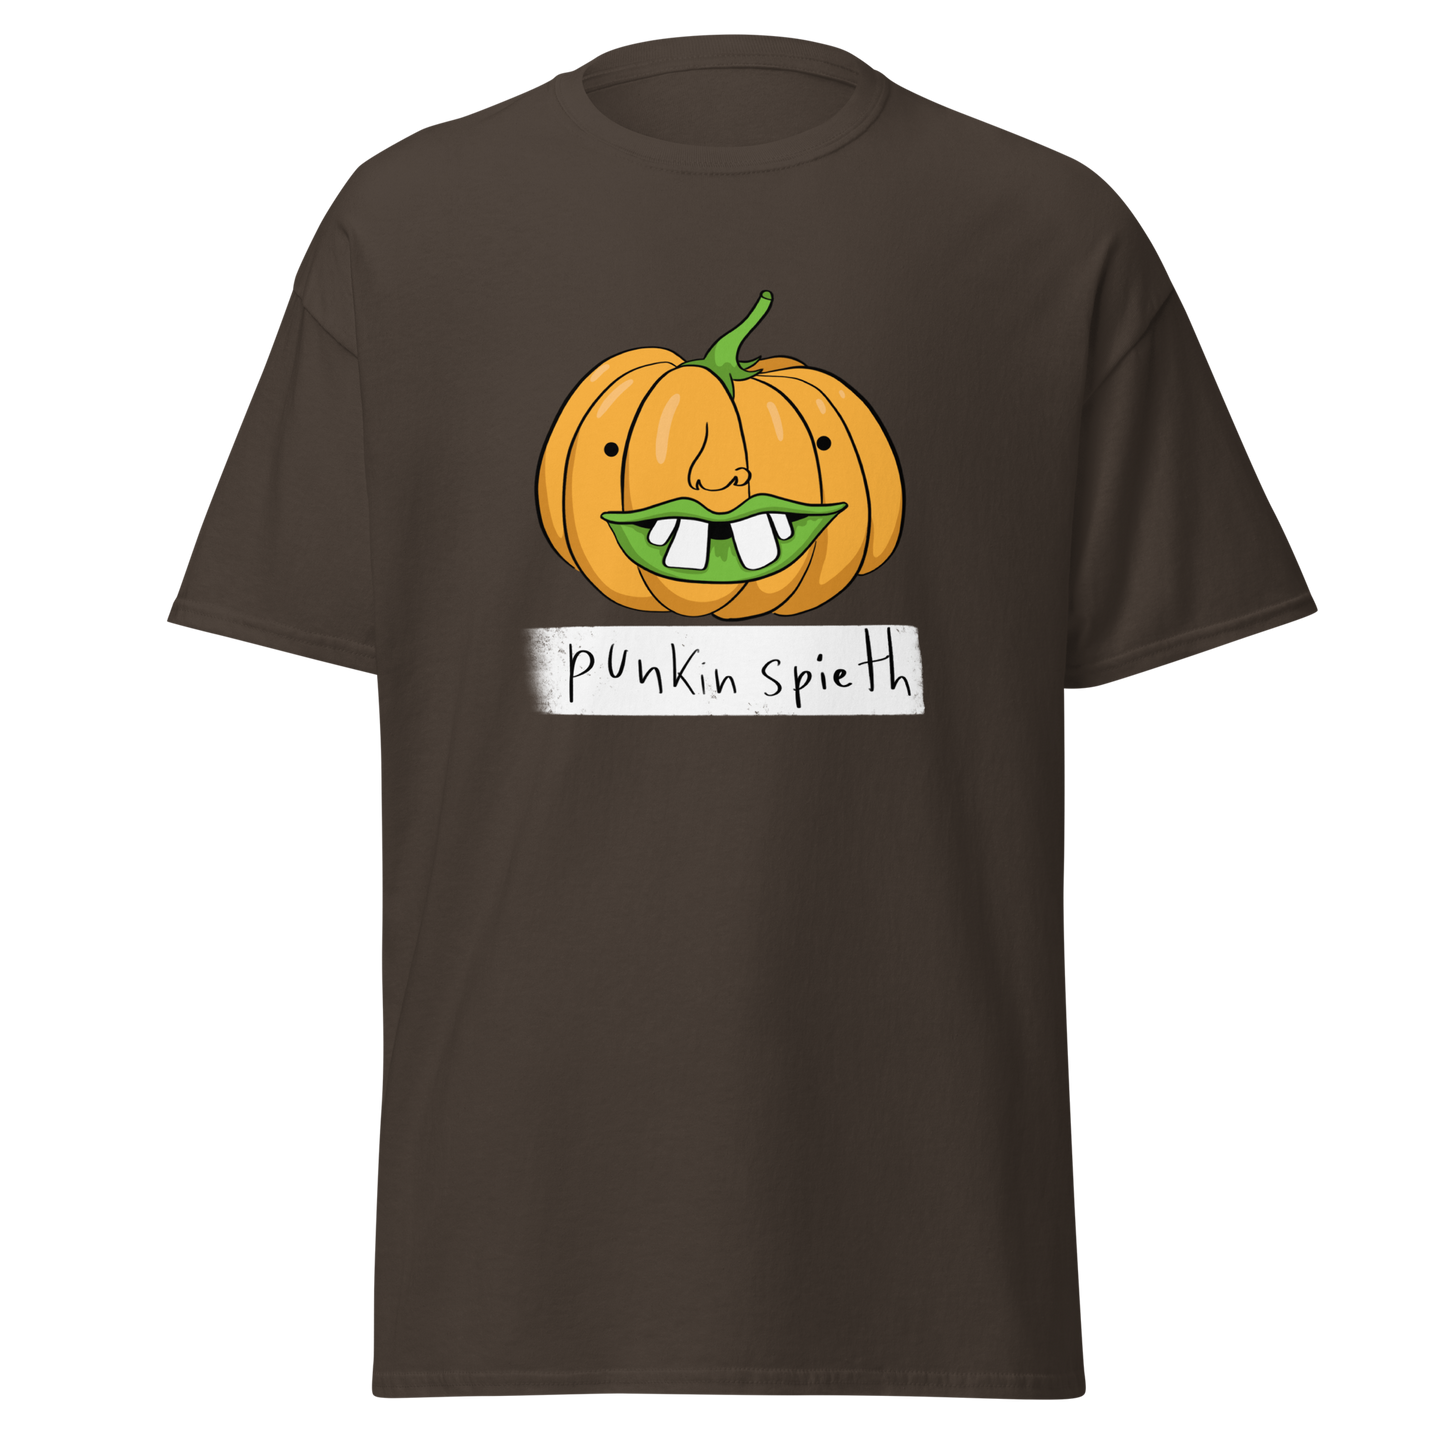 Punkin Spith T-Shirt